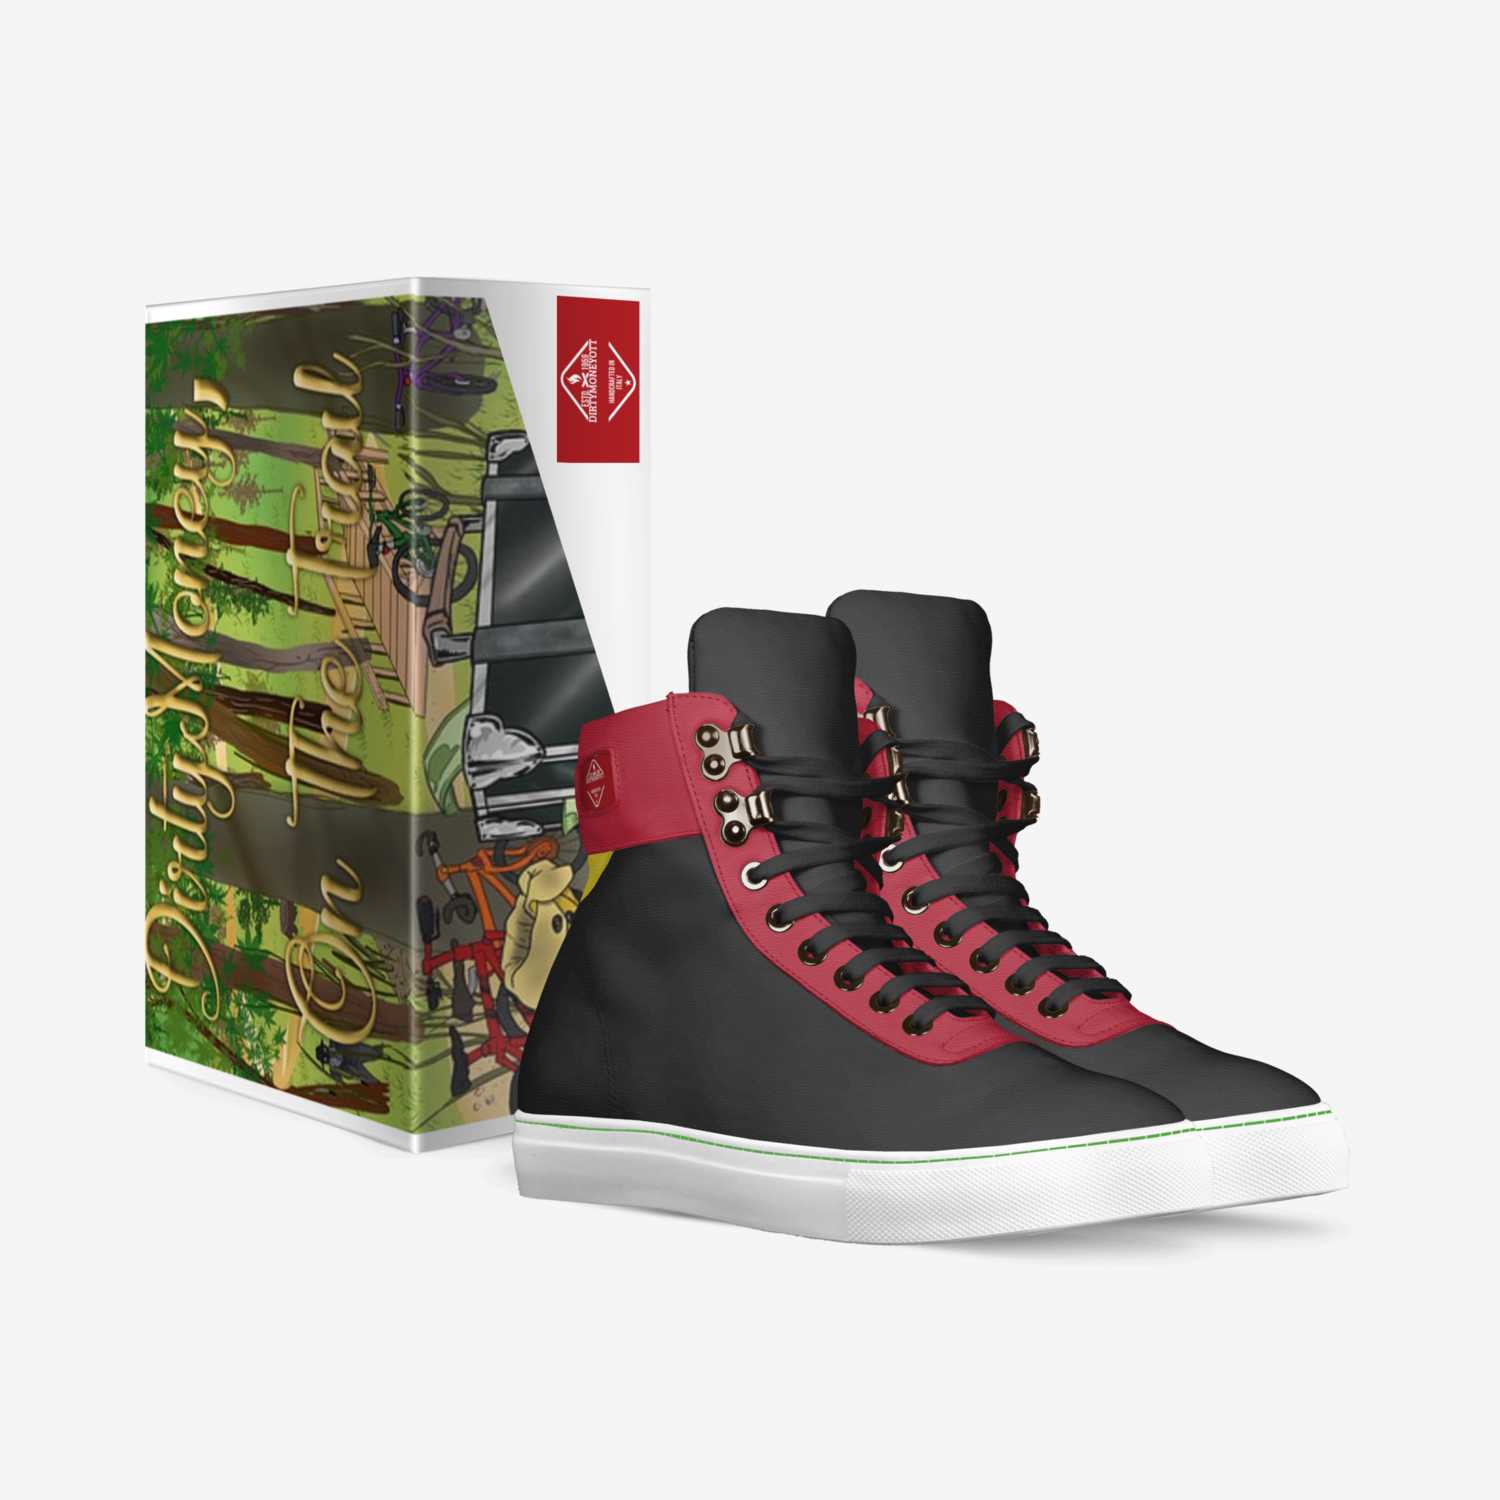 DirtyMoneyOTT custom made in Italy shoes by Allen Davis | Box view